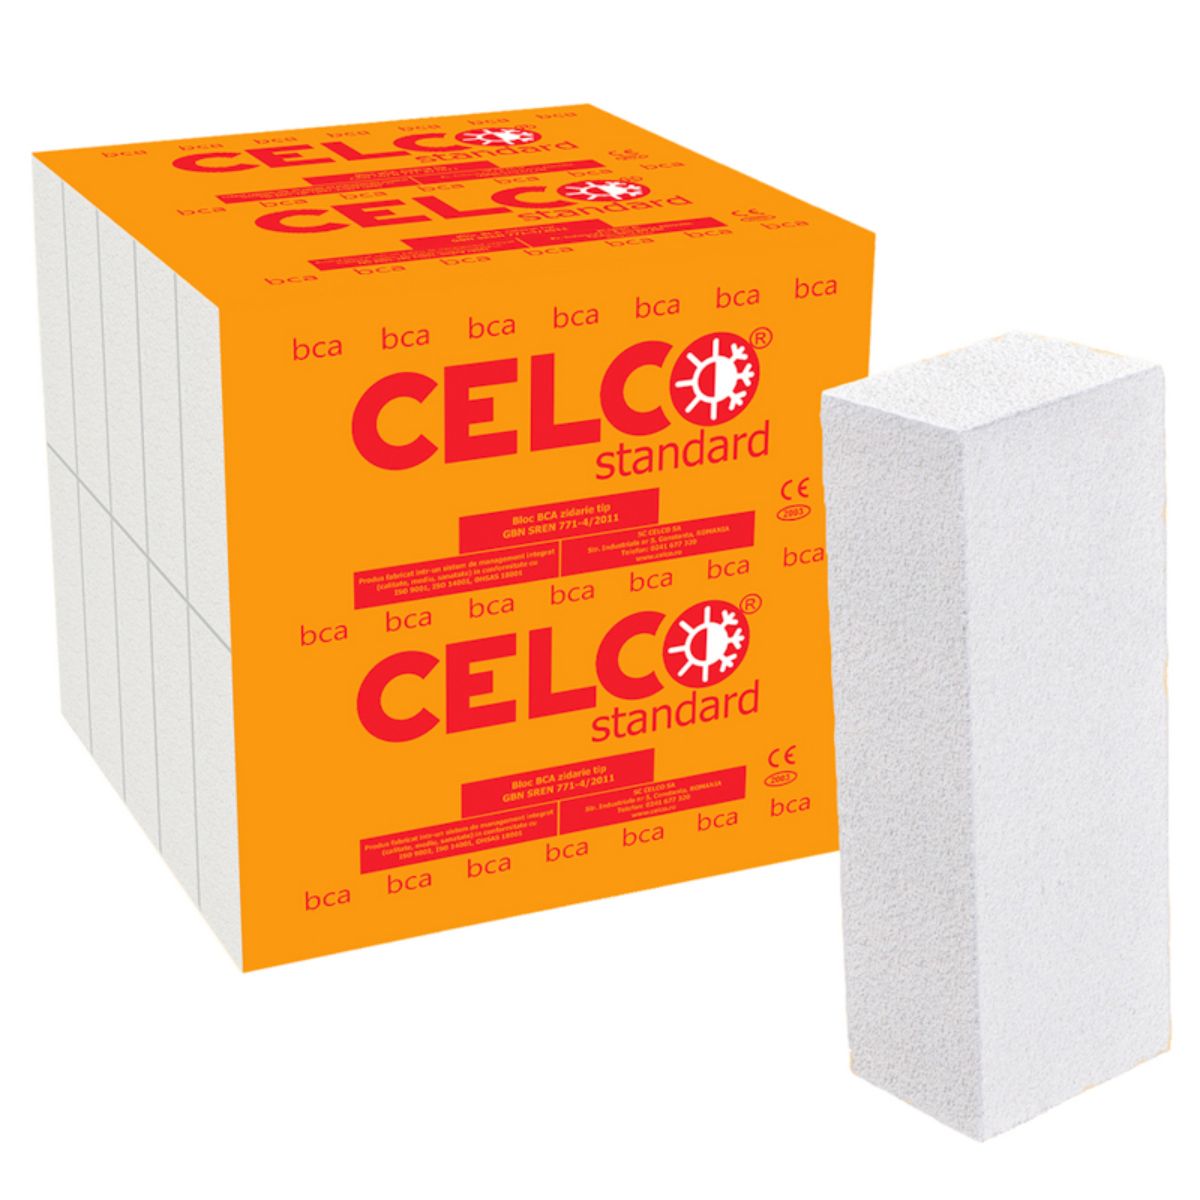 BCA Celco Standard A++ 625/400/240